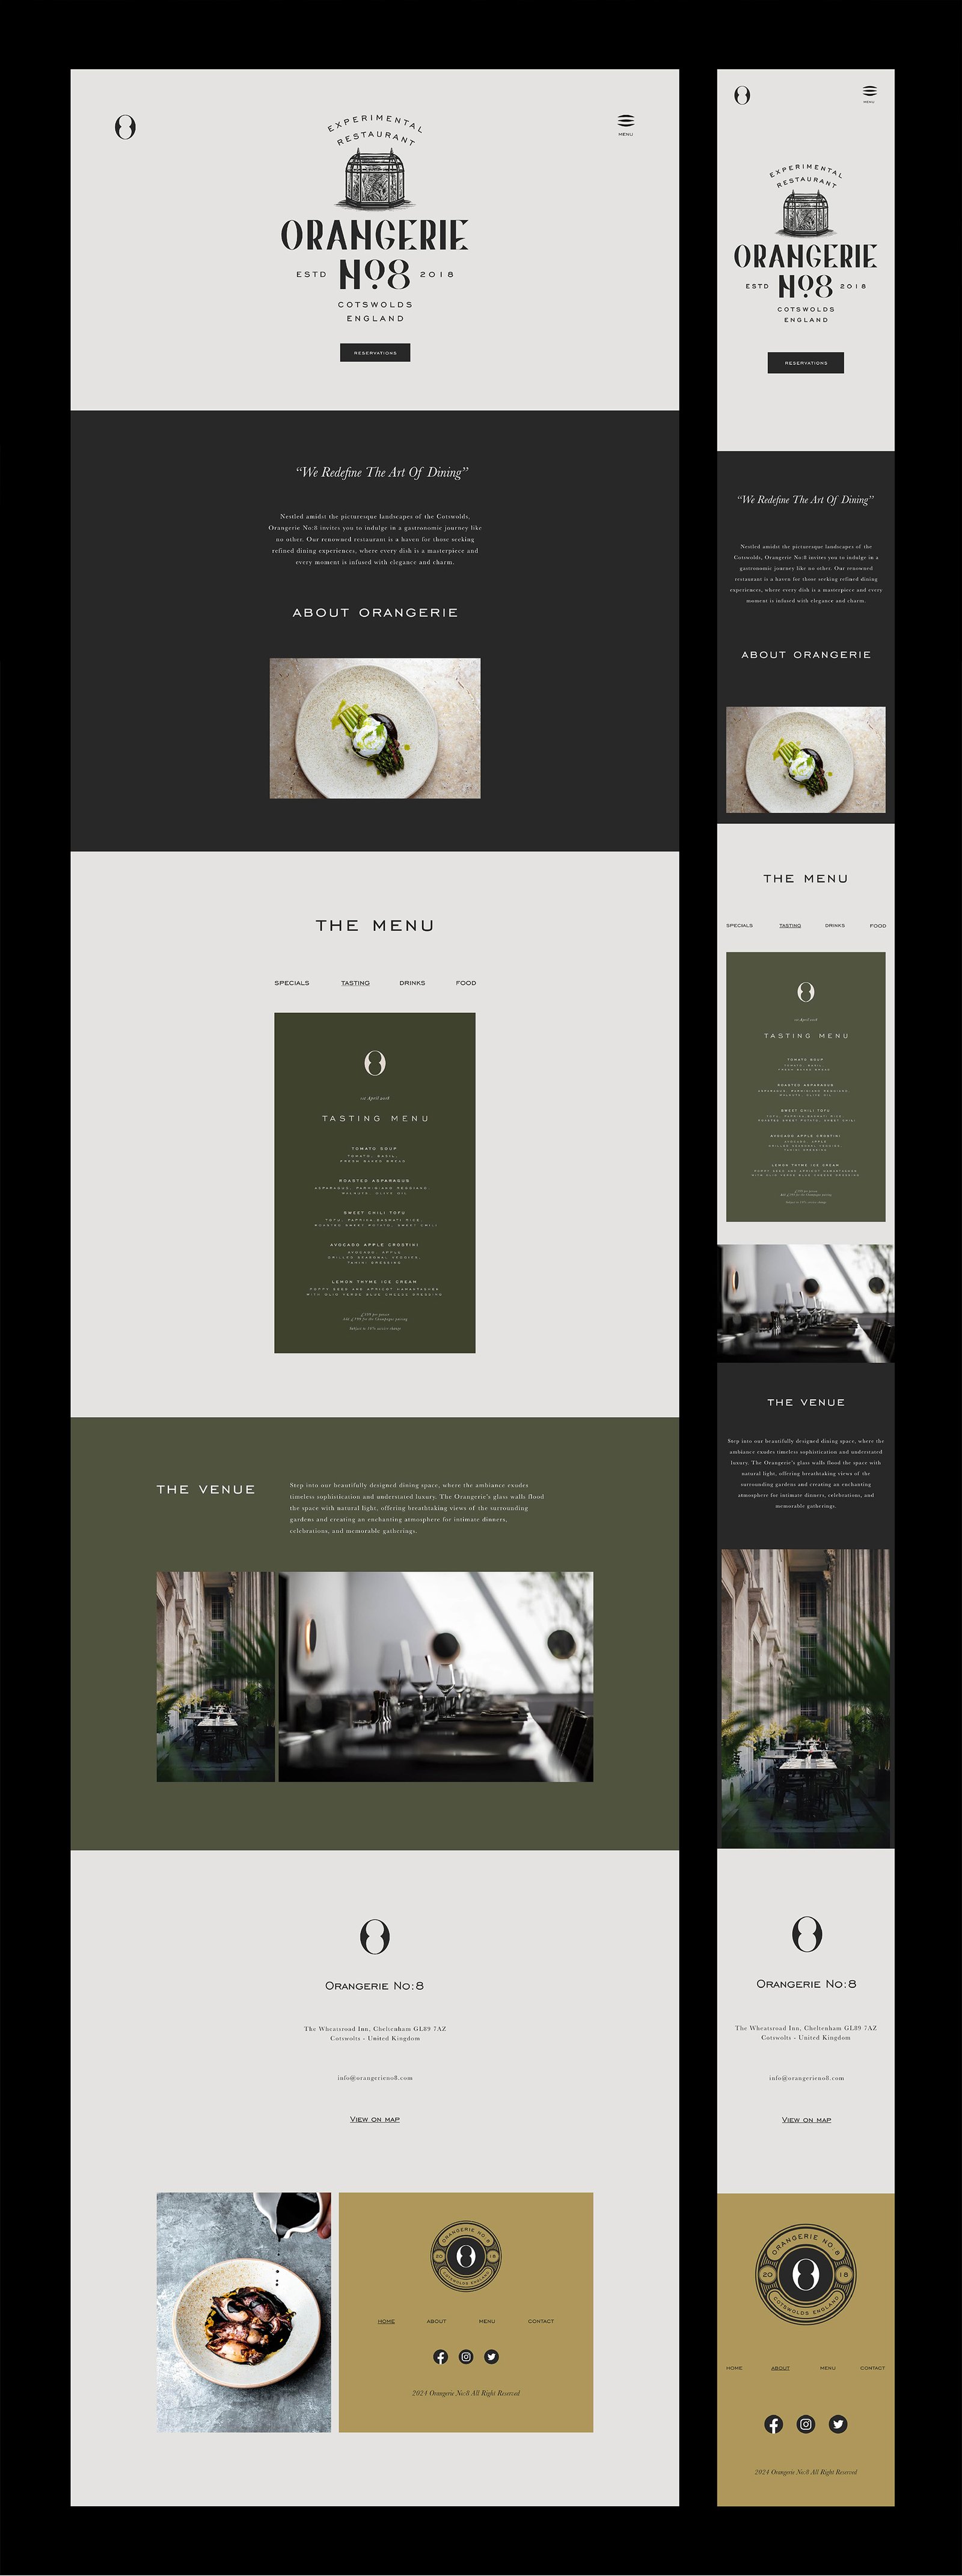 orangerieno8 luxury restaurant website design-2